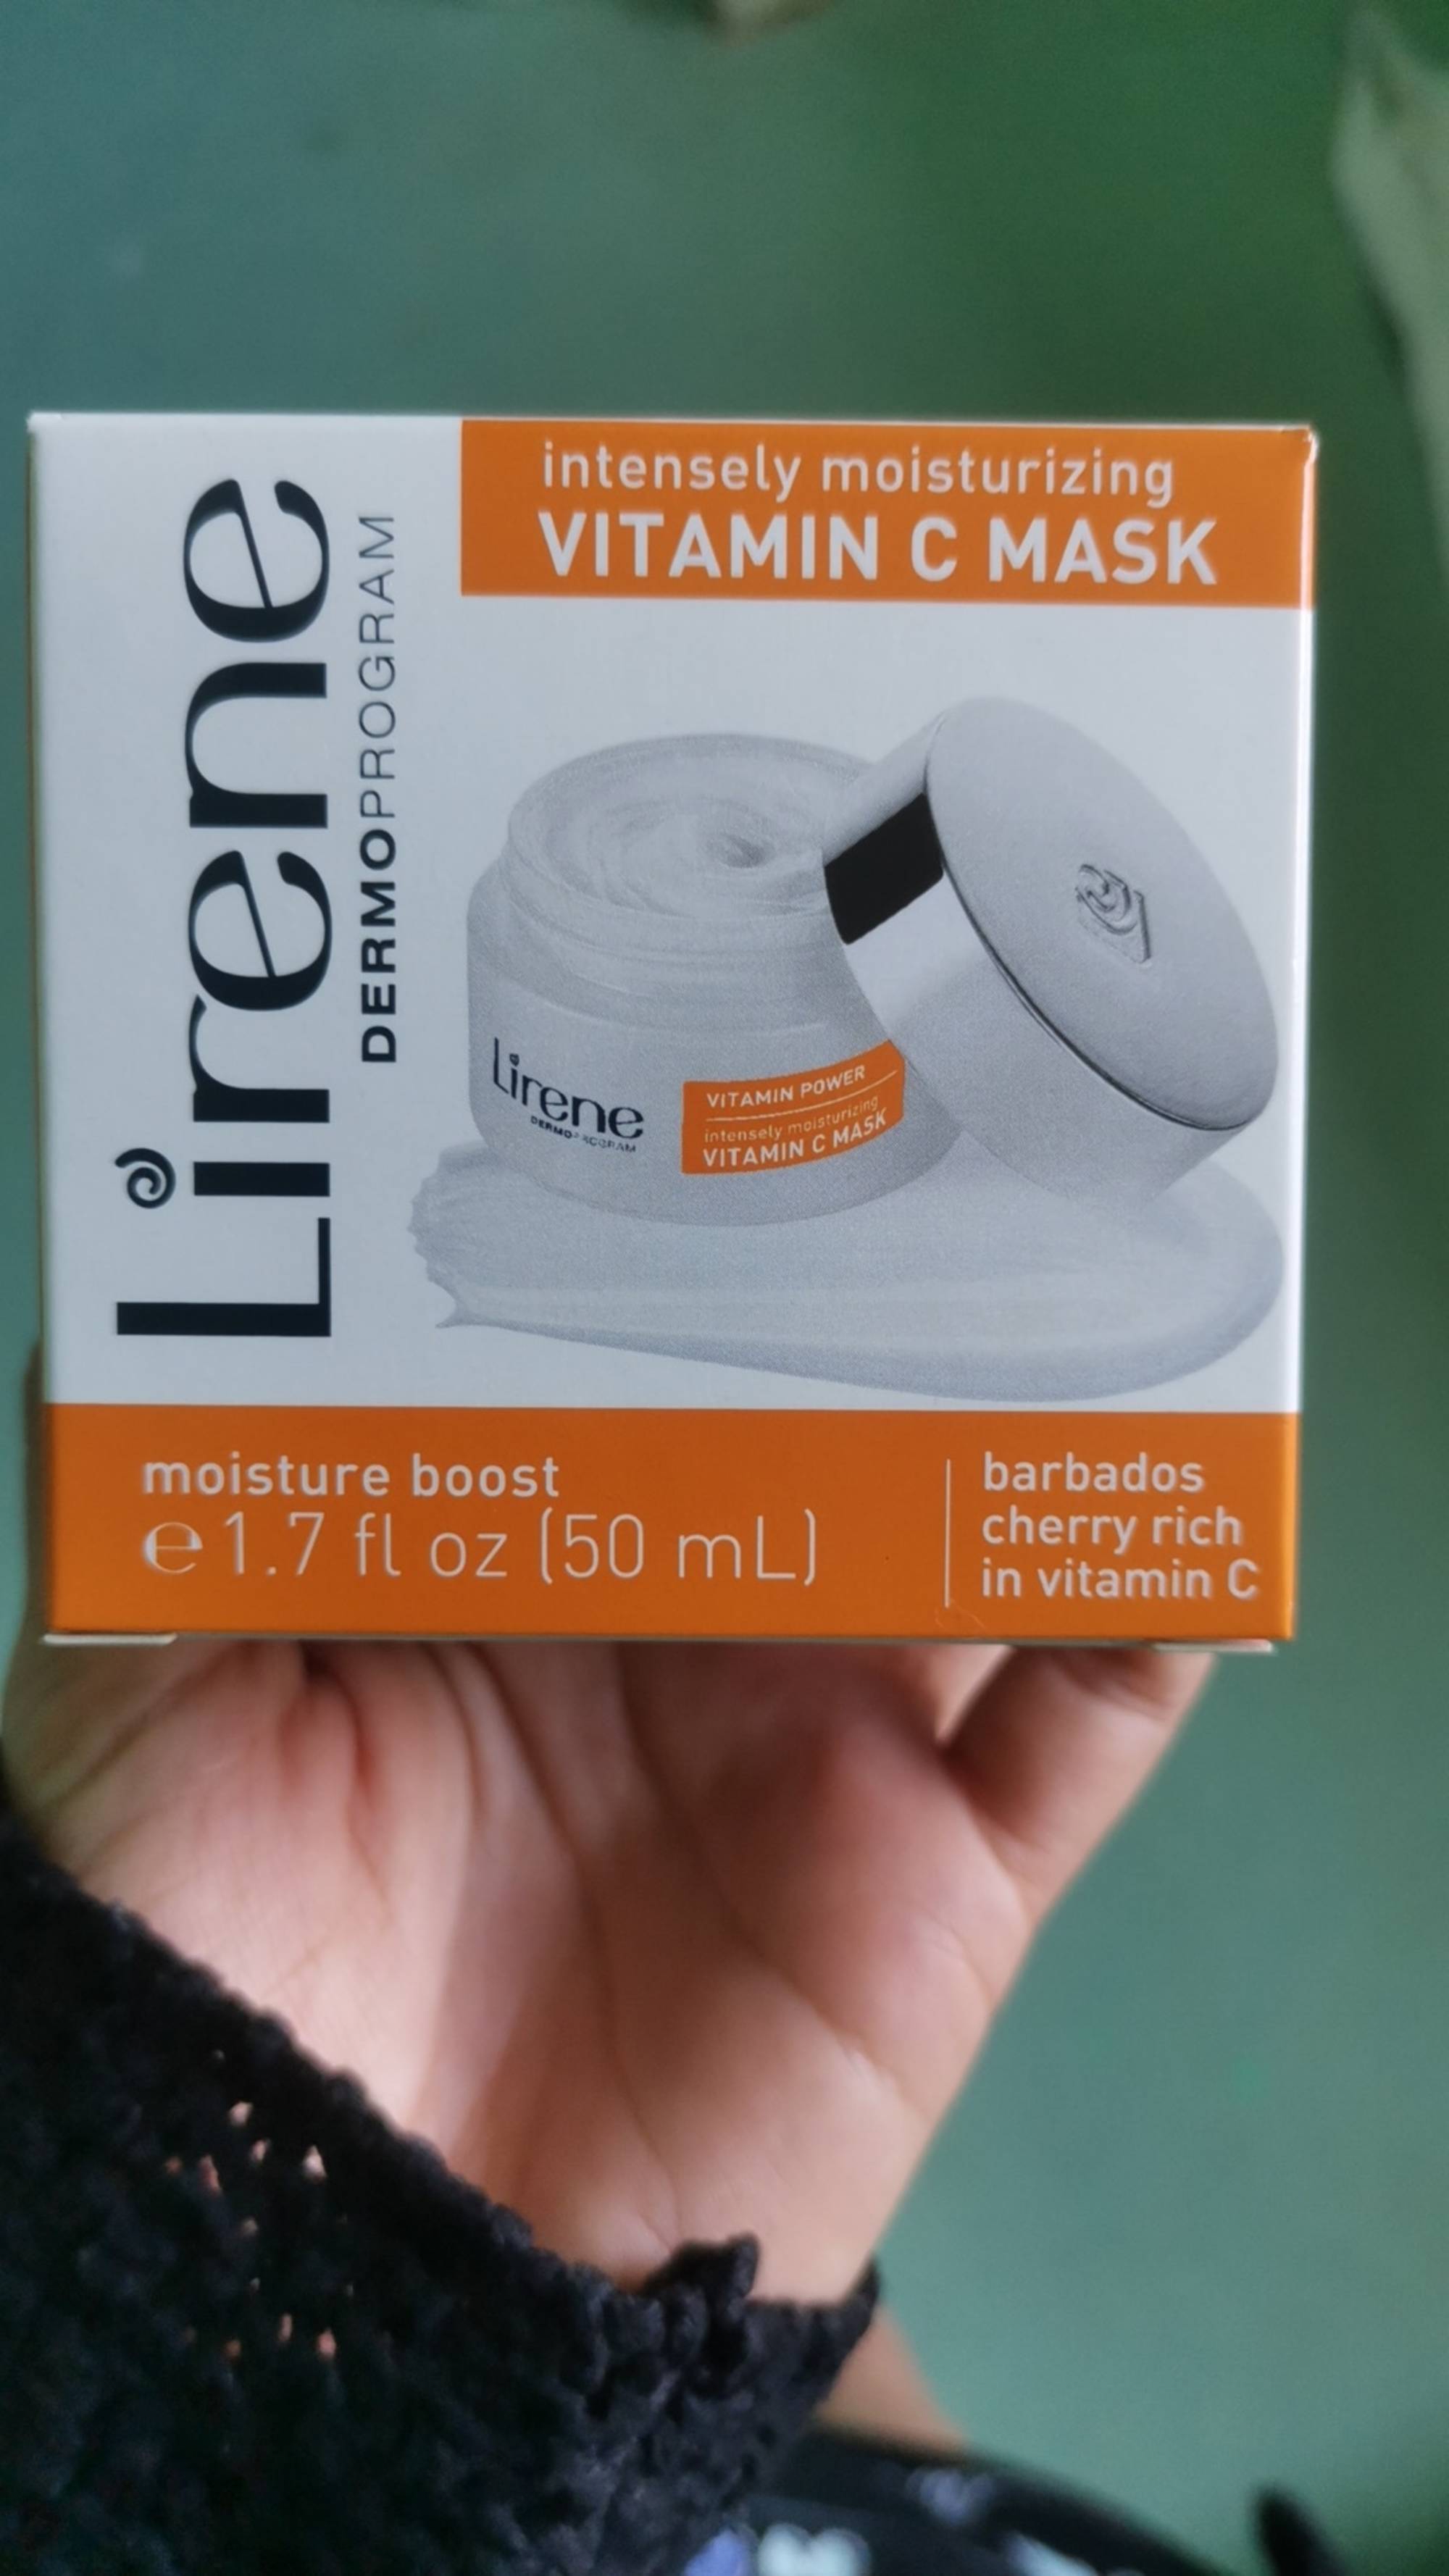 LIRENE - Intensely moisturizing vitamin C mask